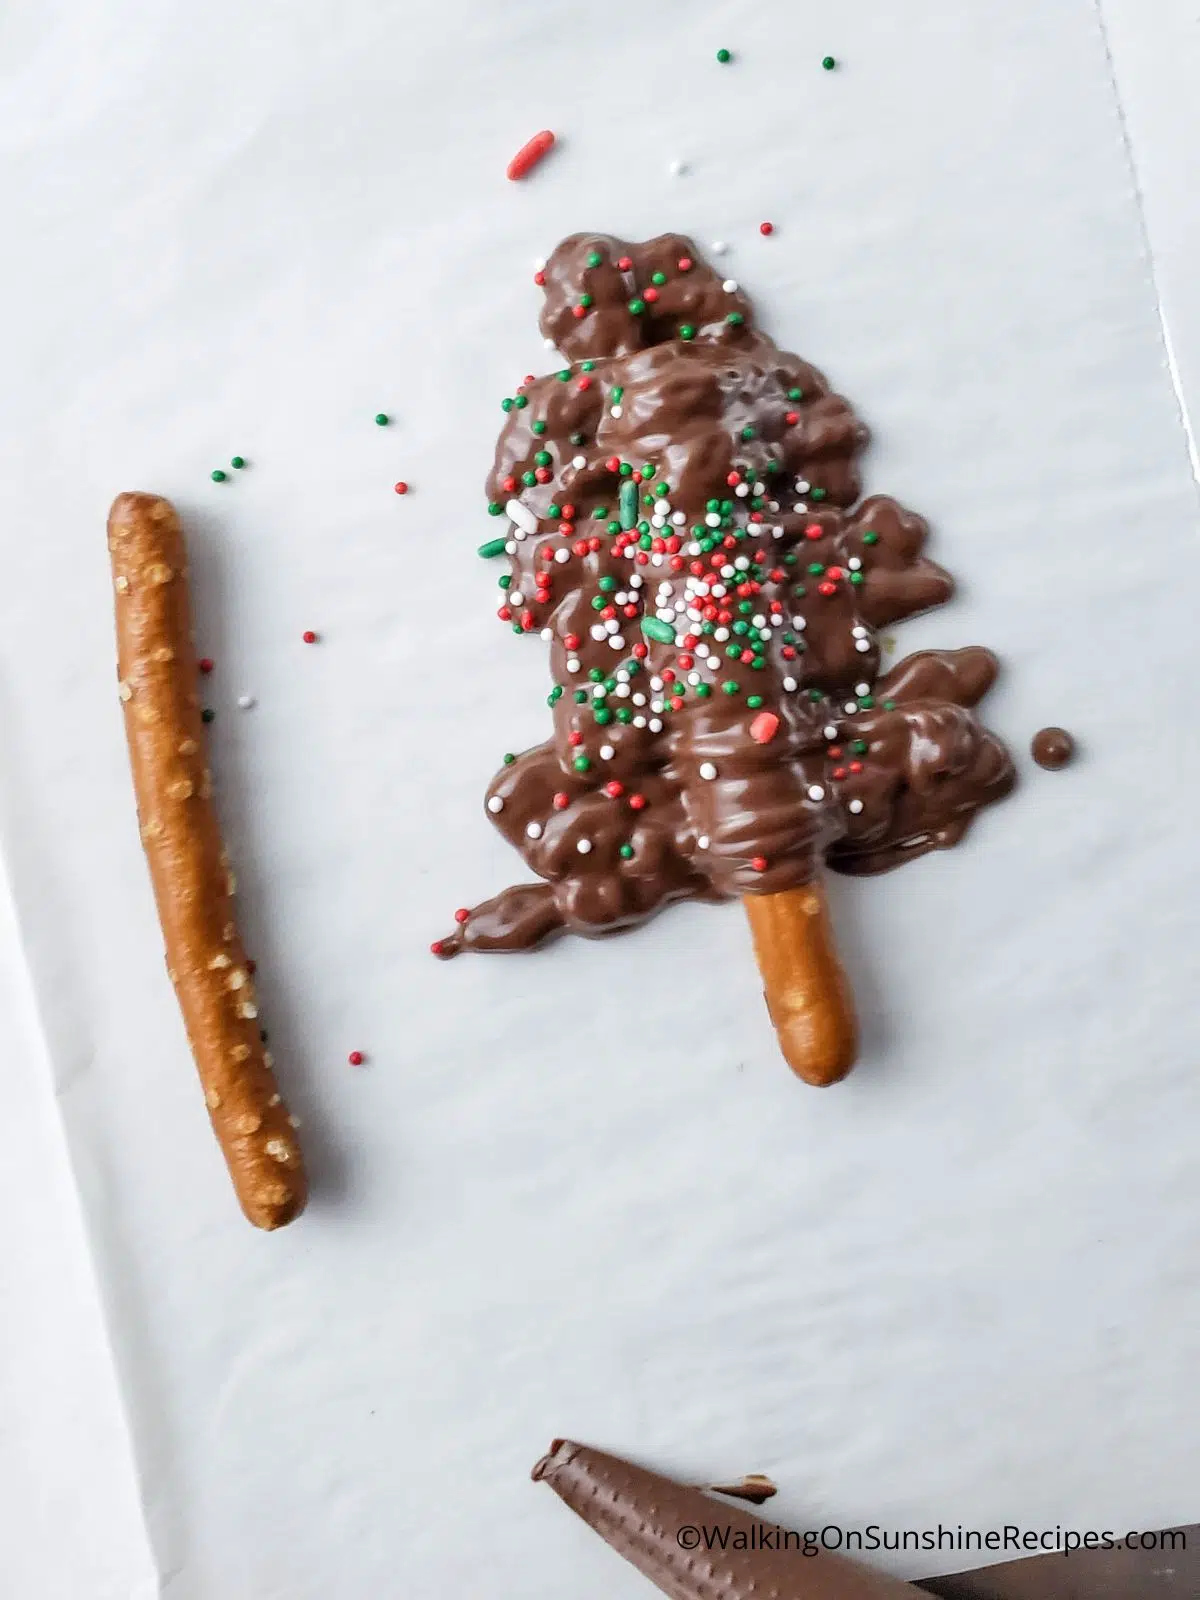 Add sprinkles to chocolate covered pretzel stick.